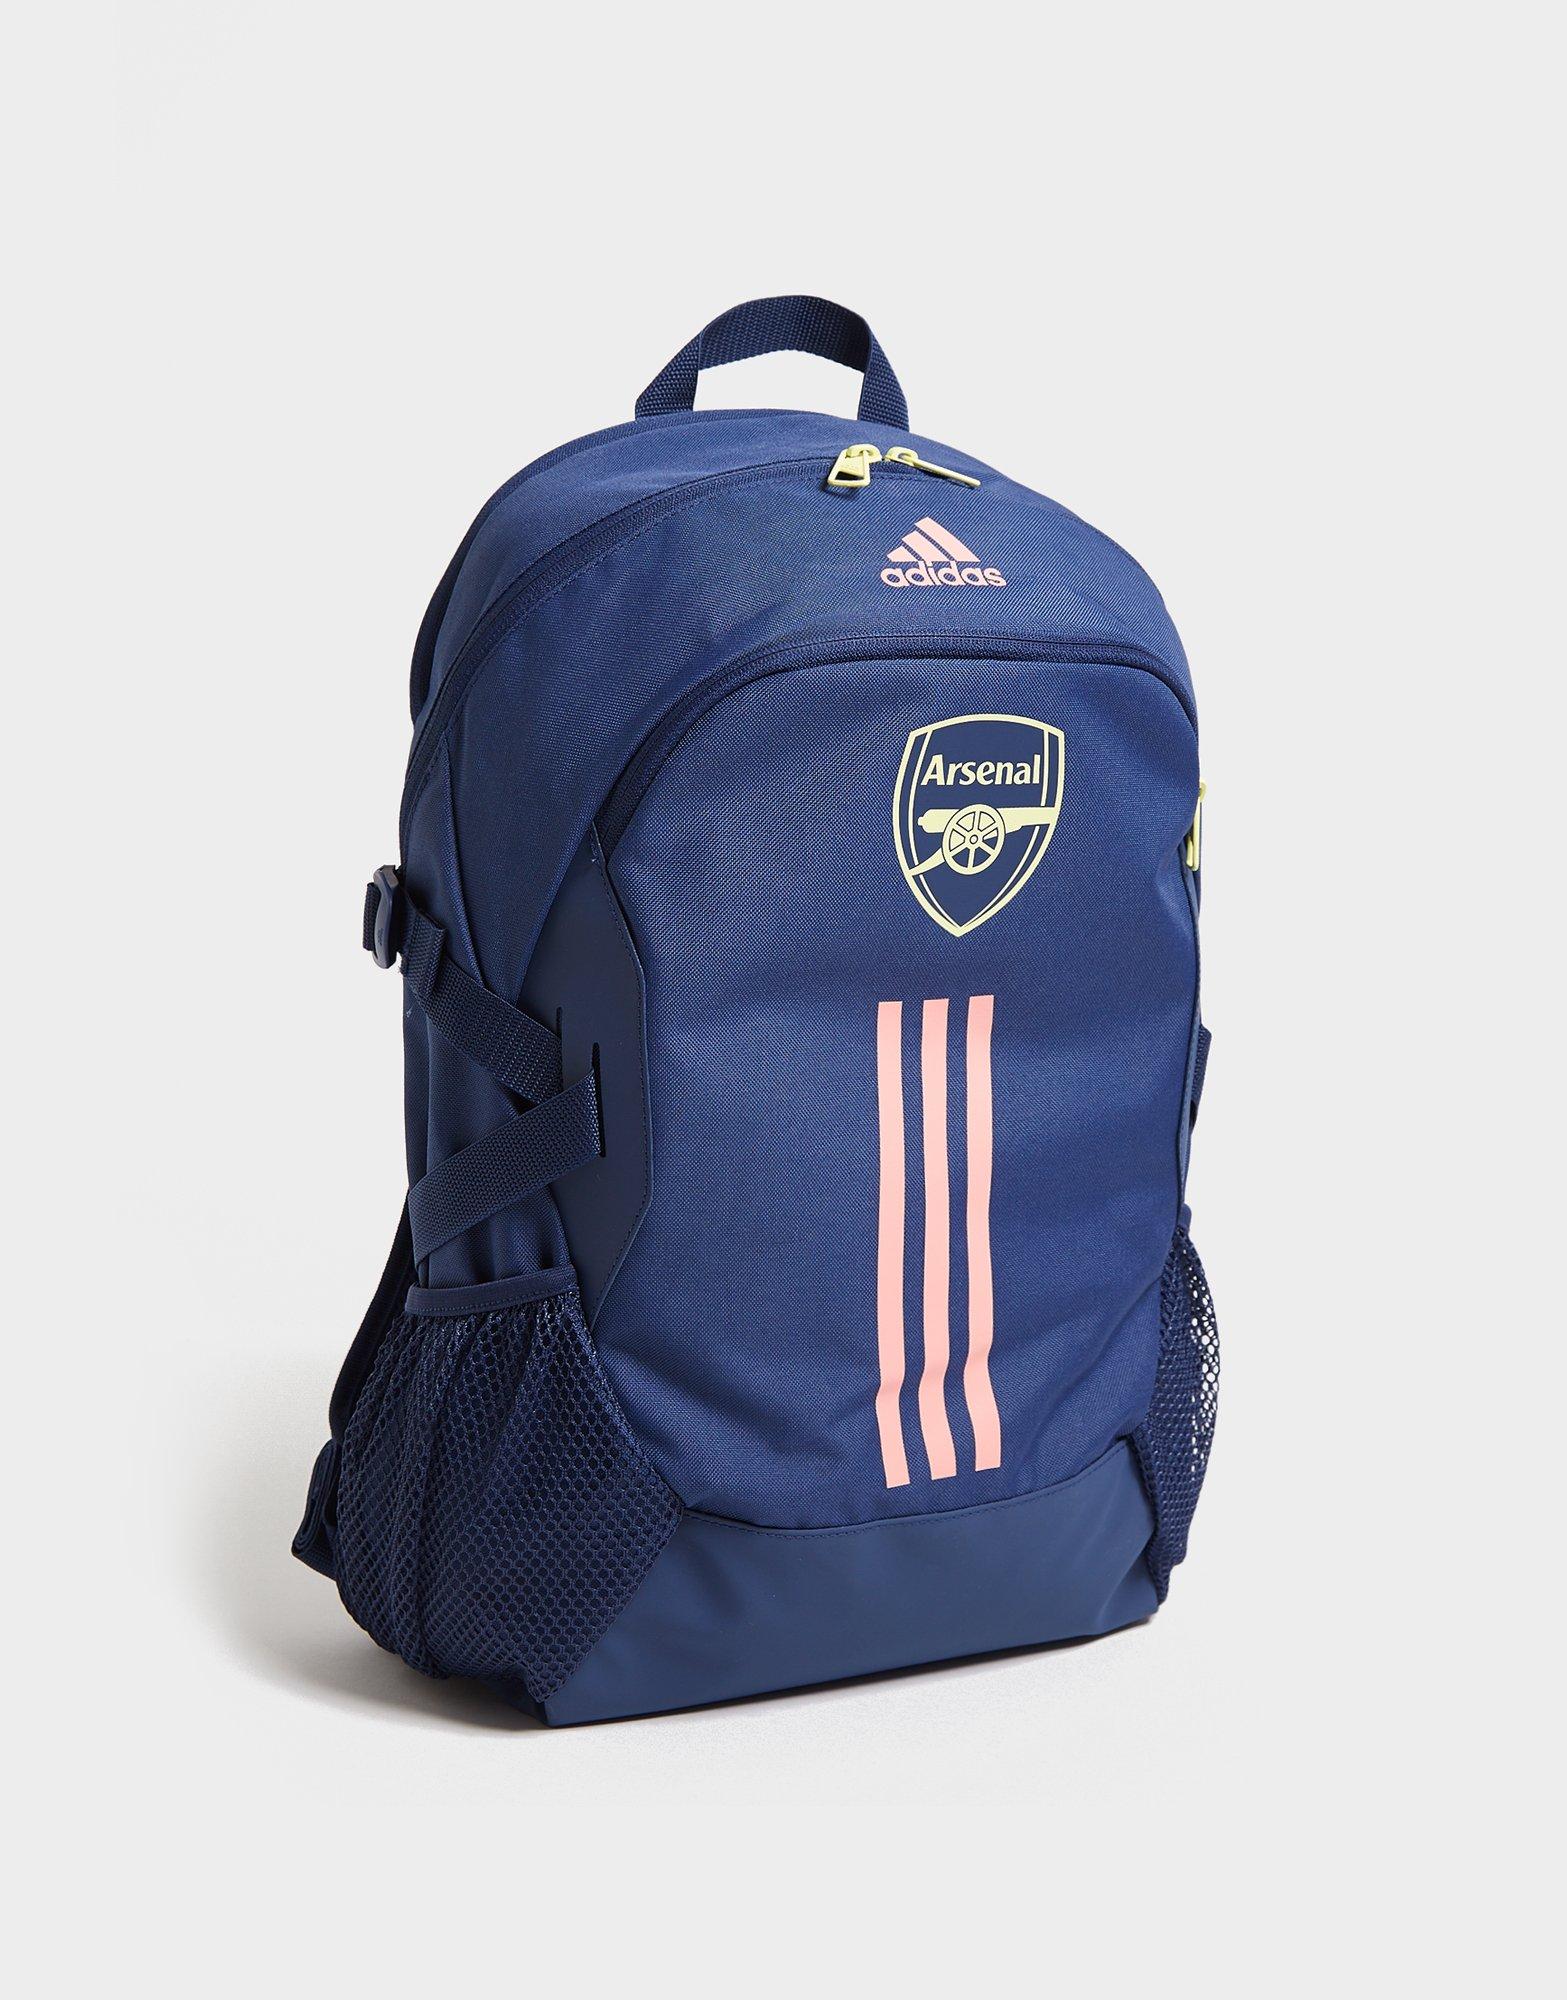 Buy adidas Performance Arsenal Backpack 